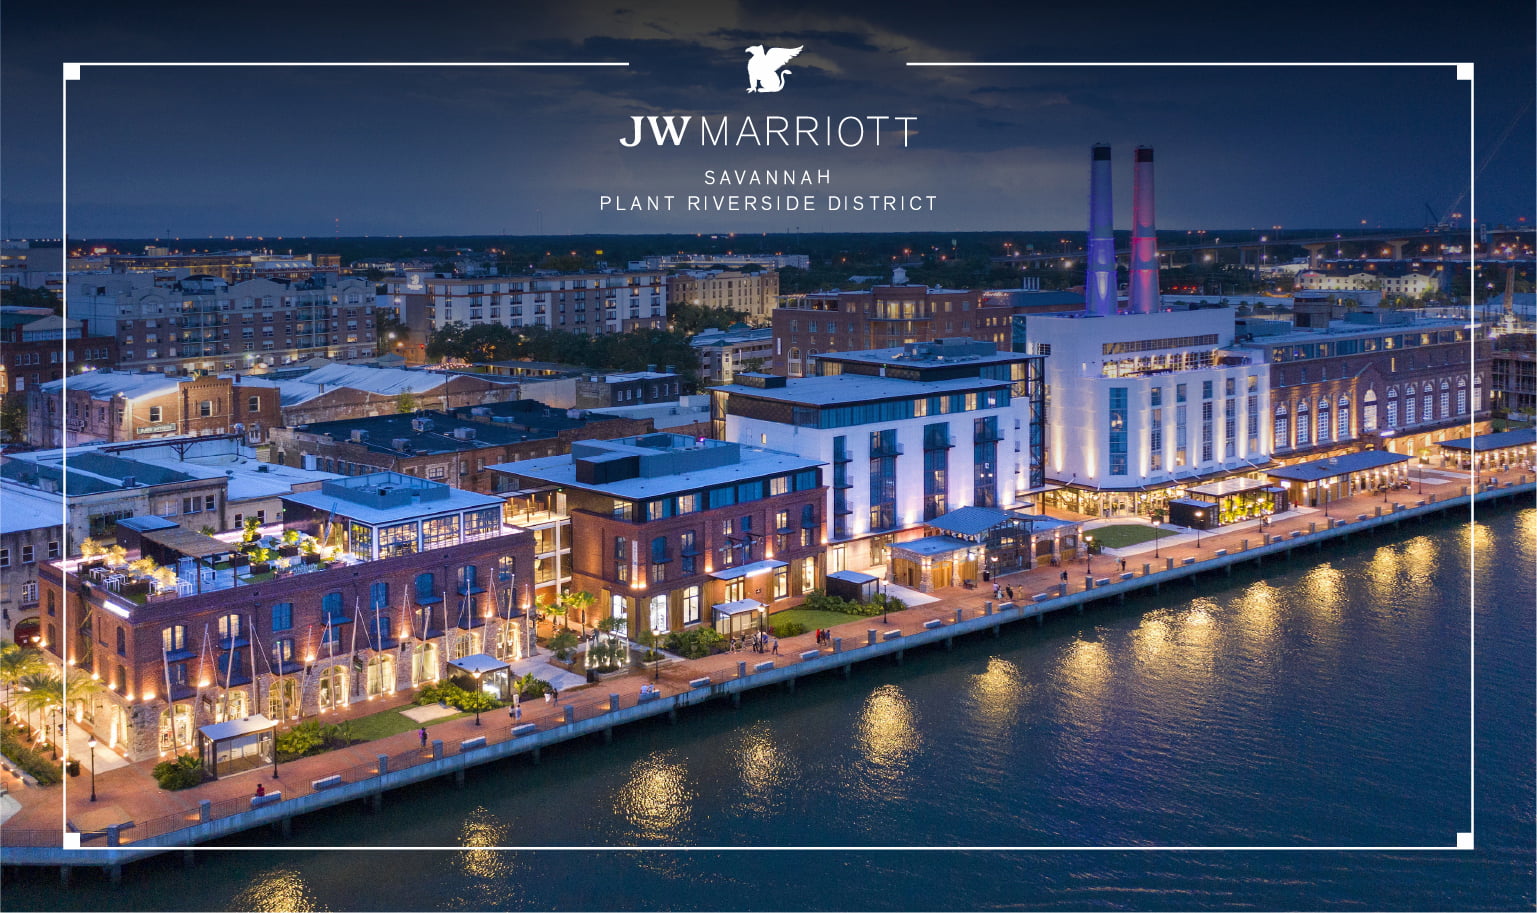 JW Marriott Savannah Plant Riverside